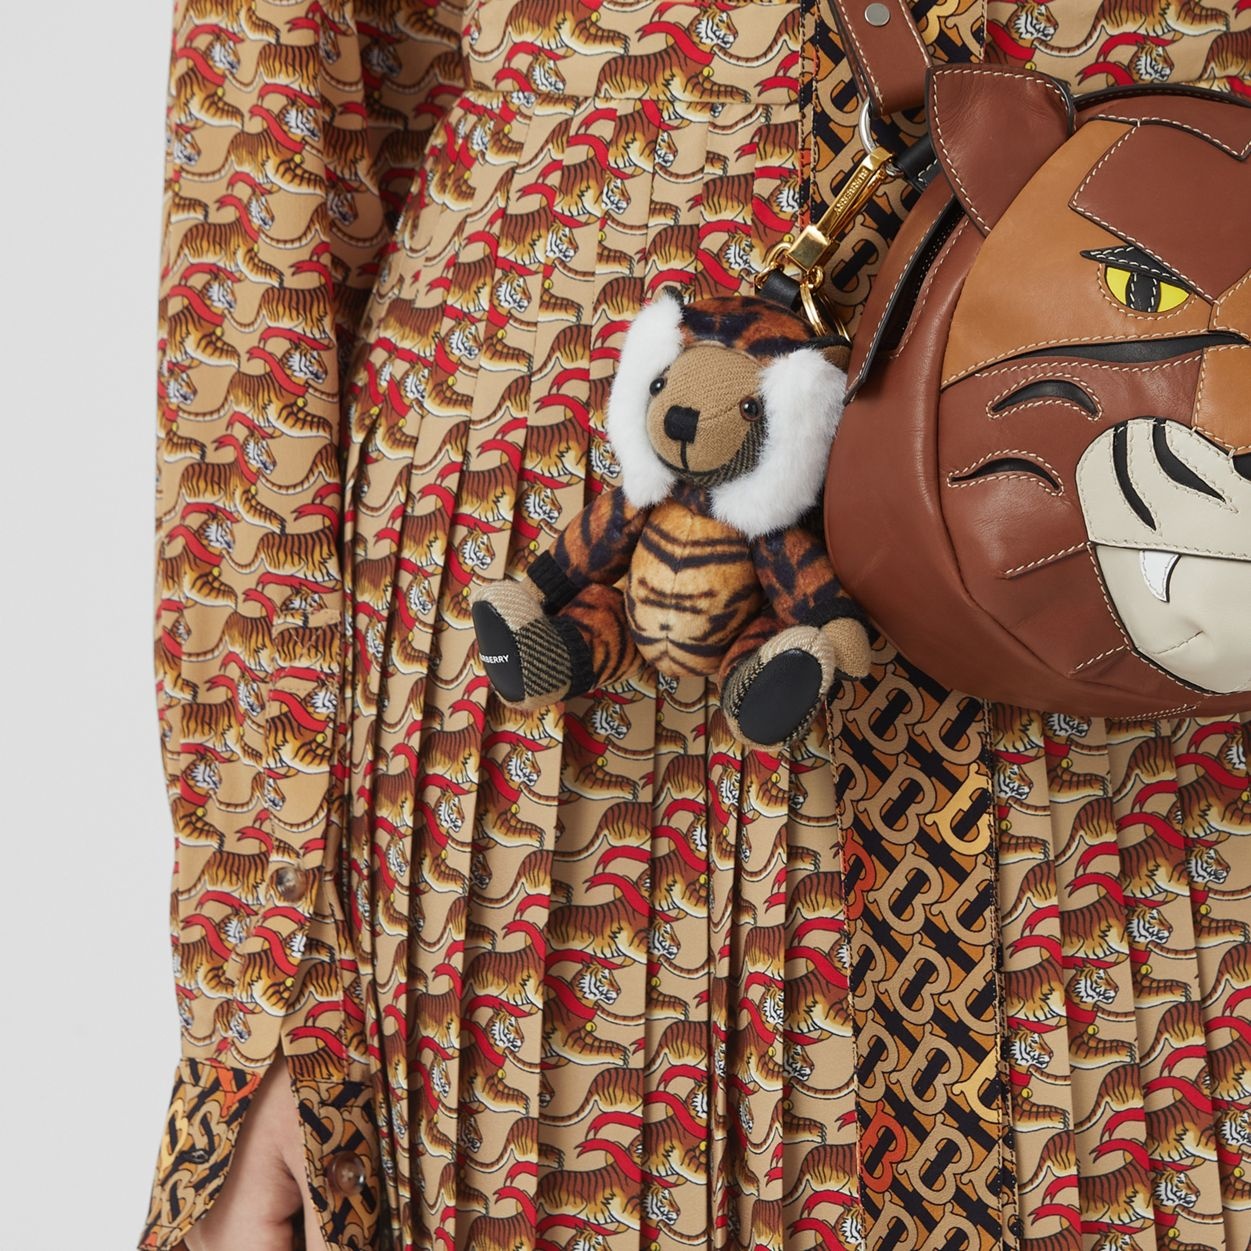 Thomas Bear Charm in Tiger Costume - 3